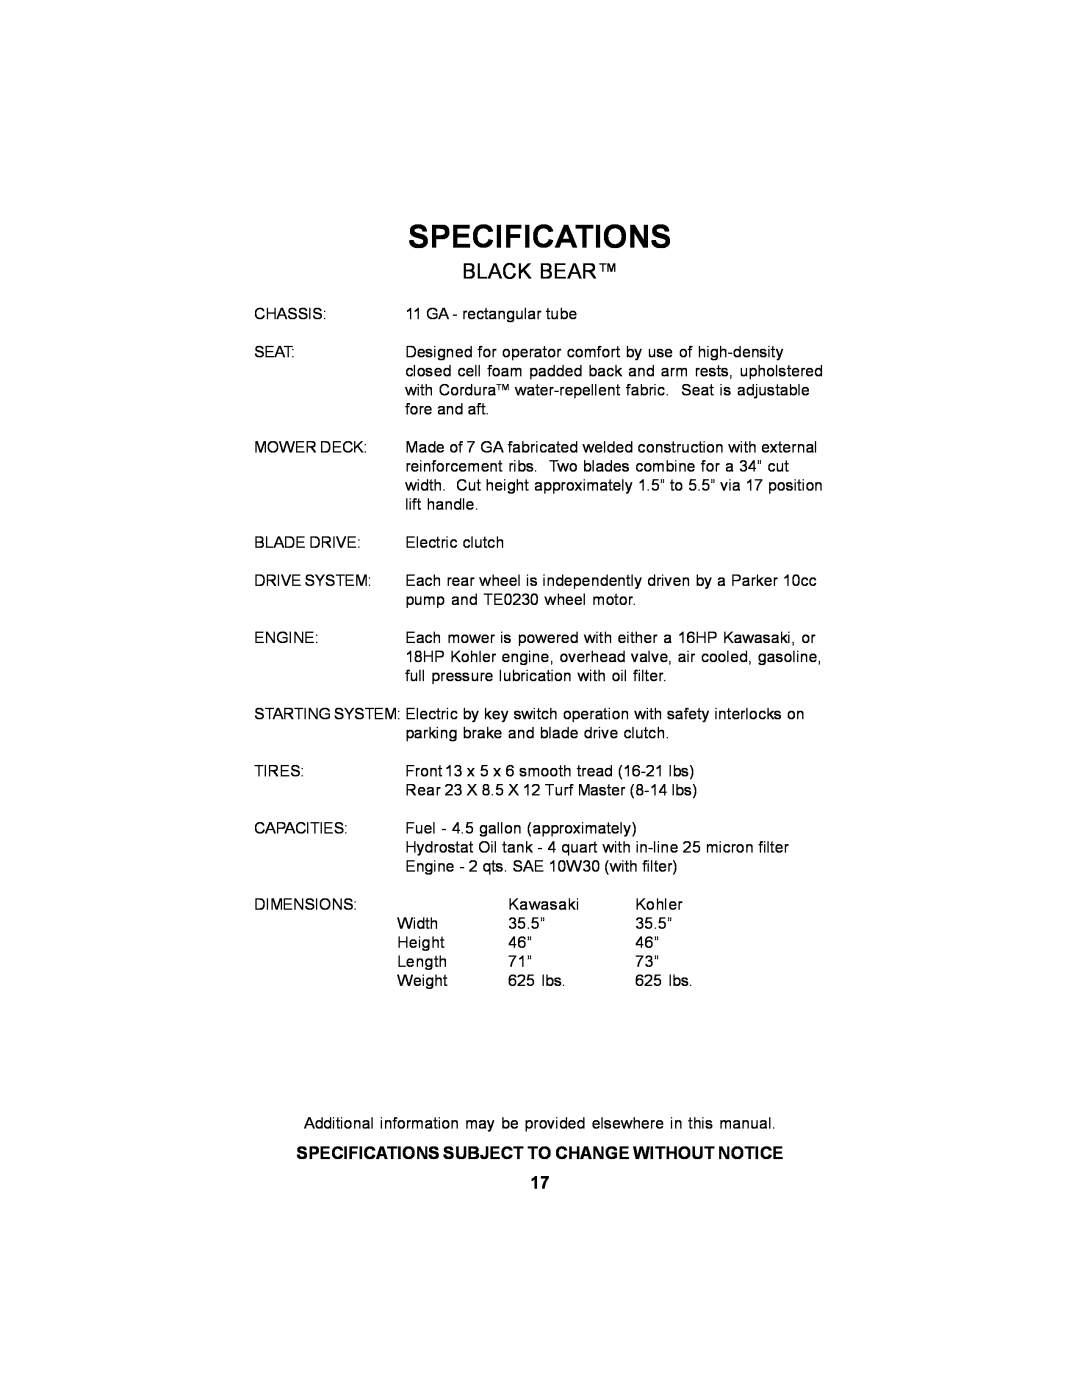 Dixon Black Bear manual Specifications 